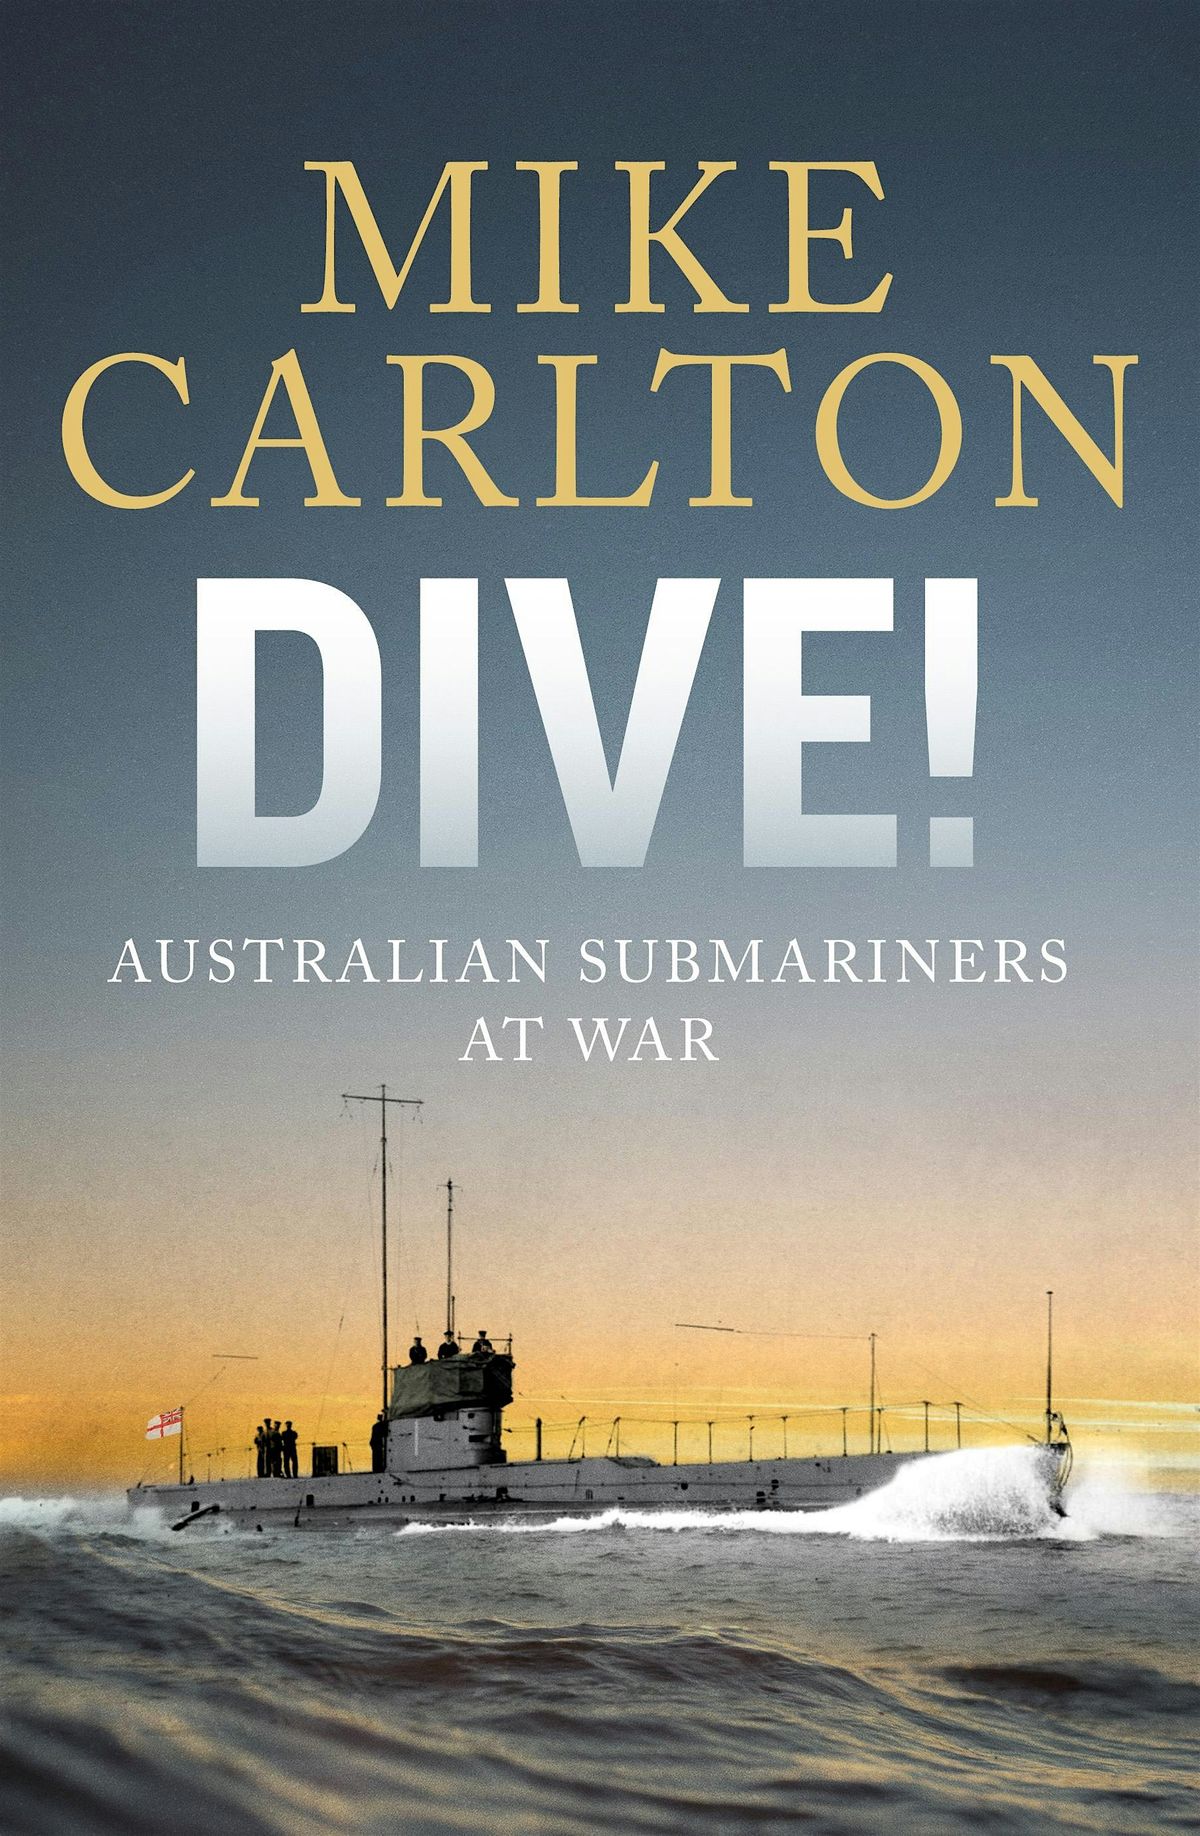 Author Talk: Mike Carlton - Dive! - Australian submariners at war